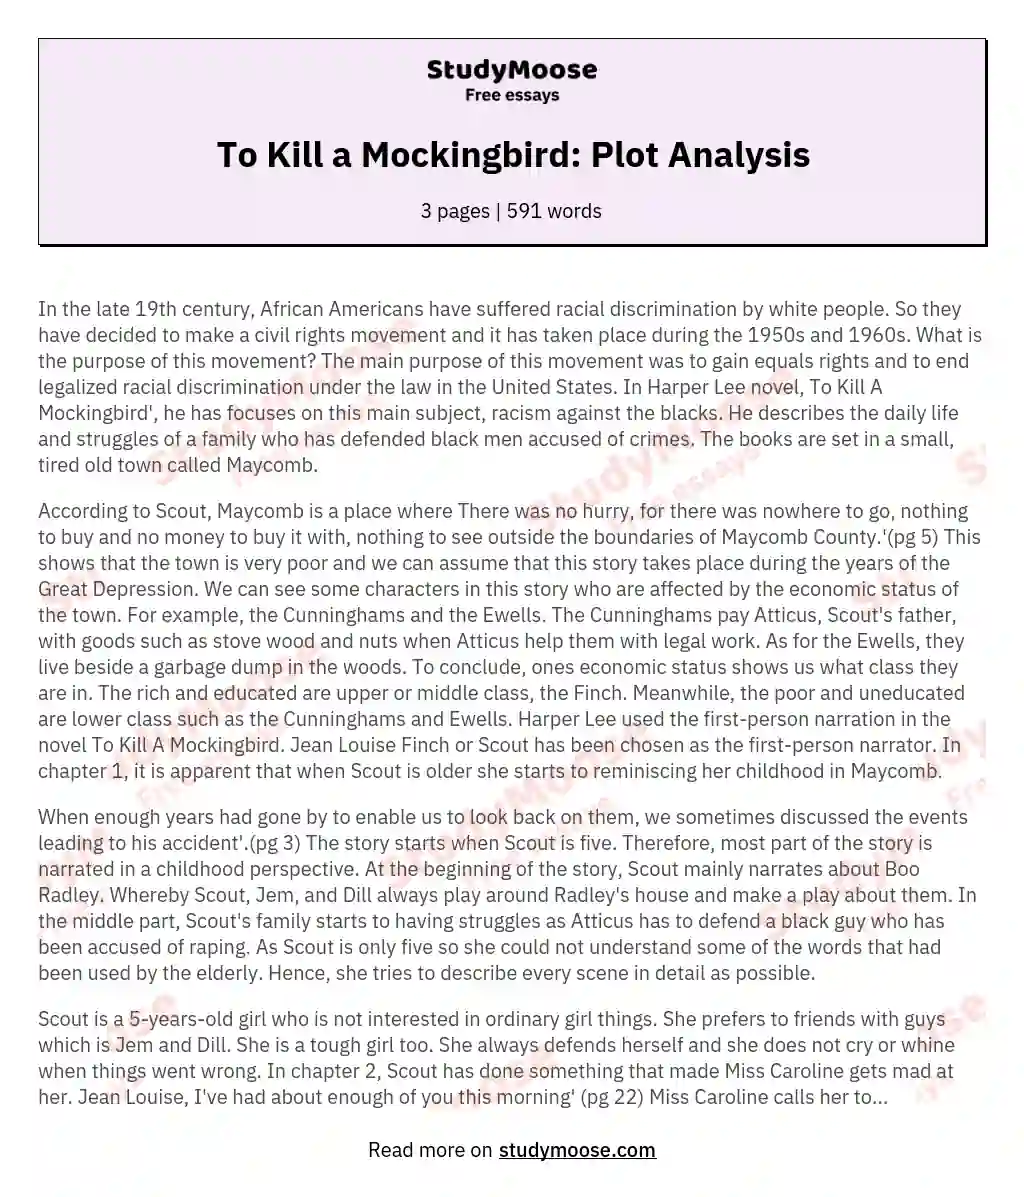 To Kill a Mockingbird: Plot Analysis